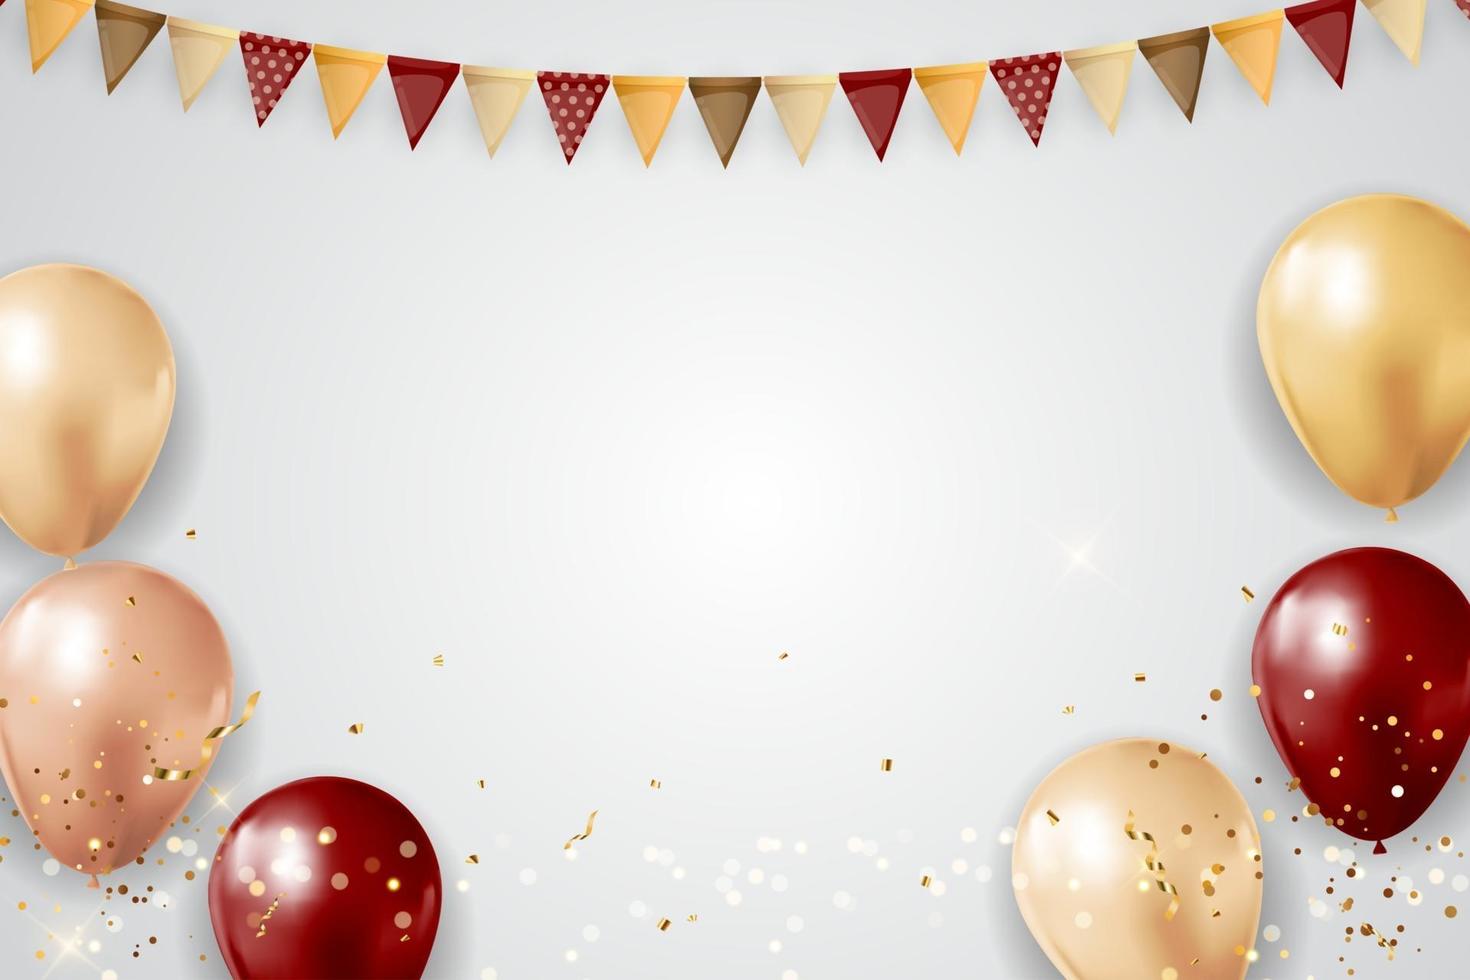 feest glanzende vakantie achtergrond met ballonnen, slinger en confetti vector